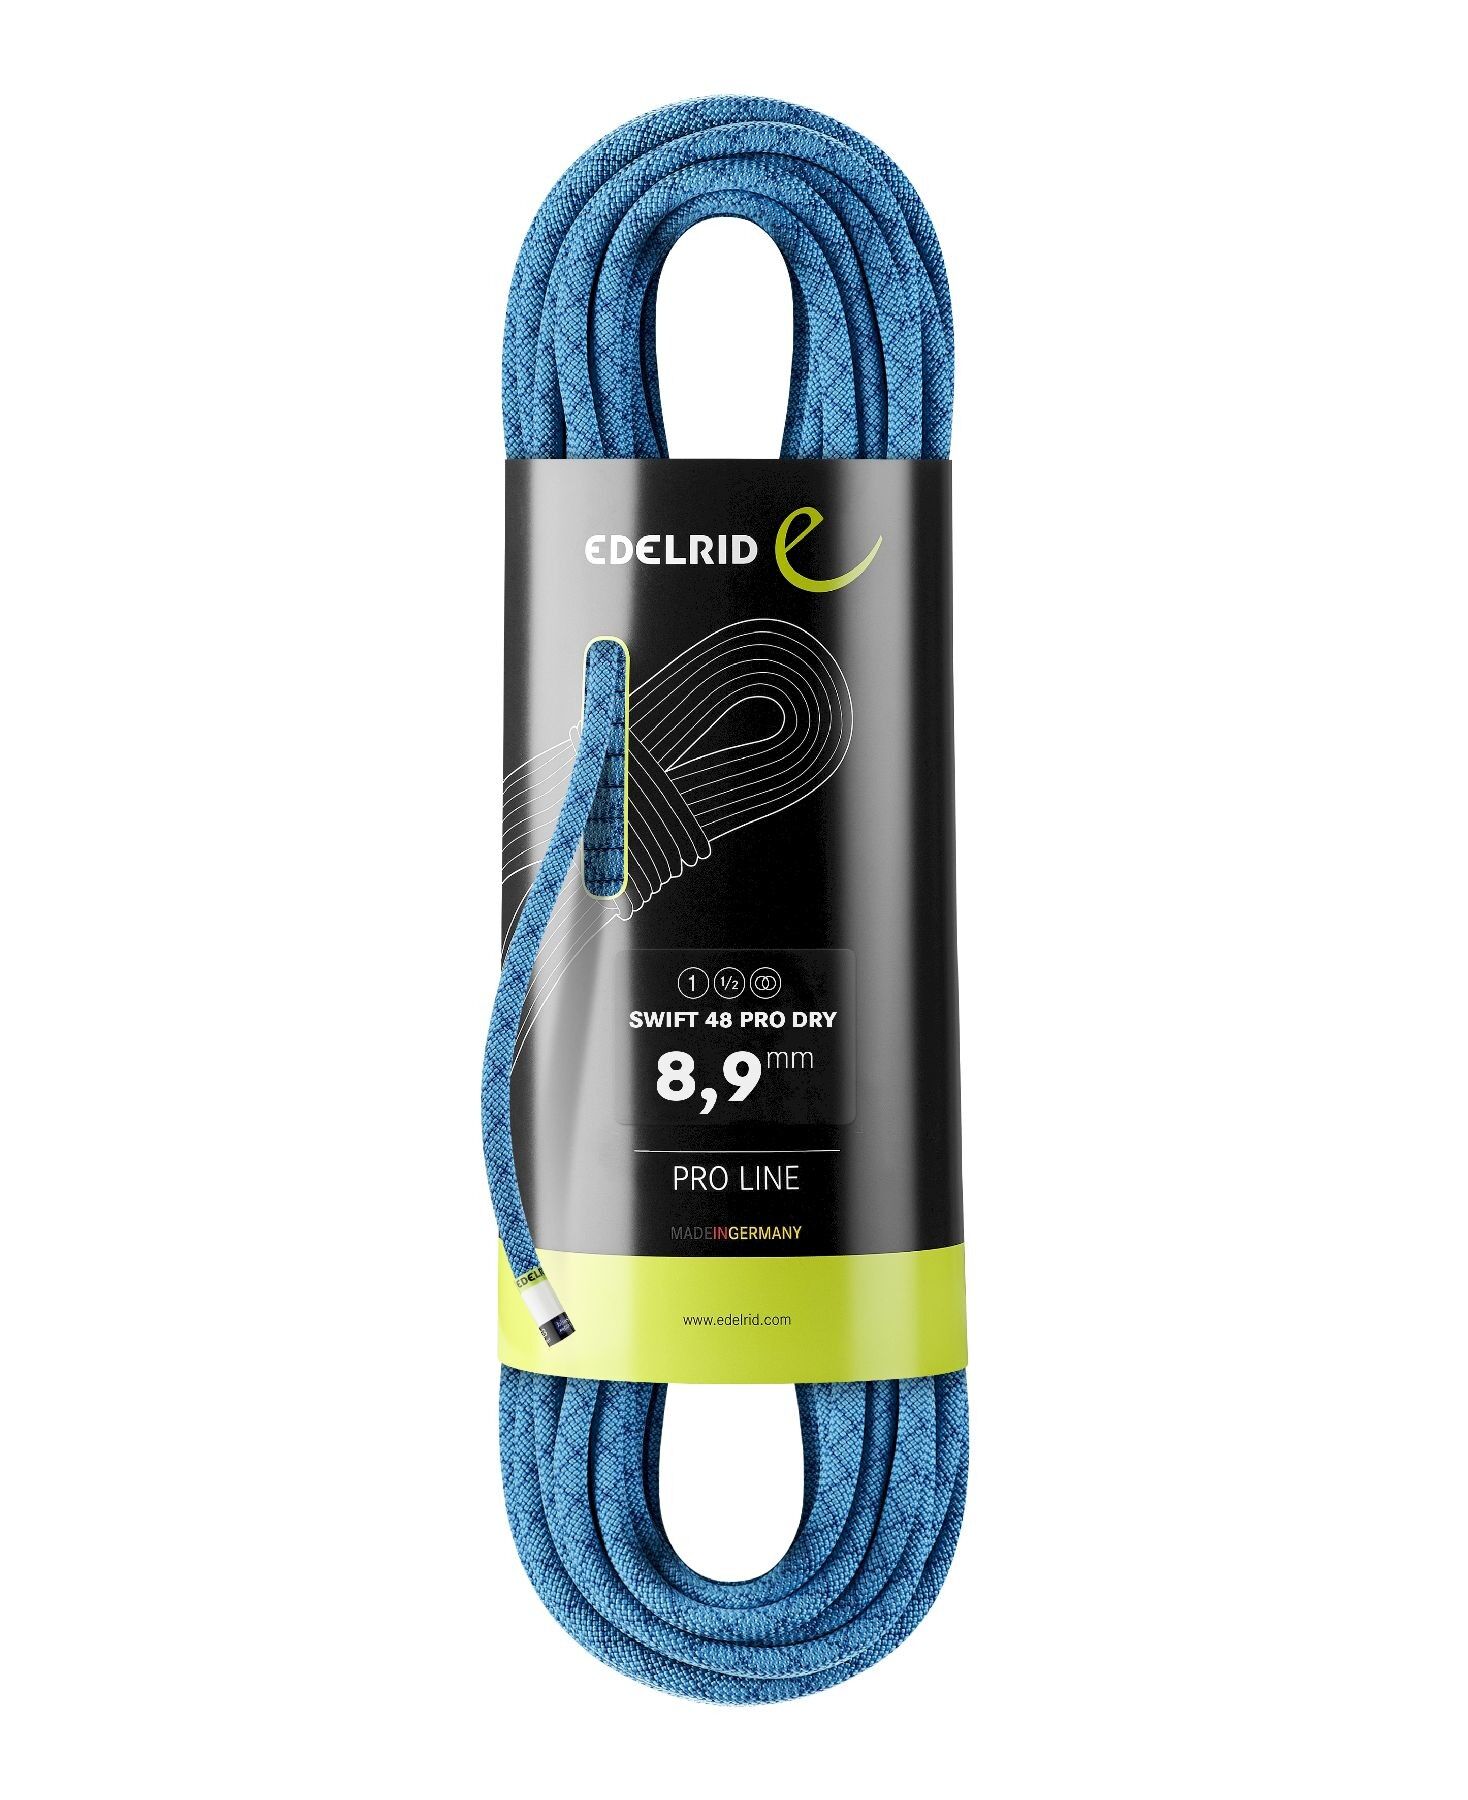 Edelrid Swift 48 Pro Dry 8,9mm - Single rope